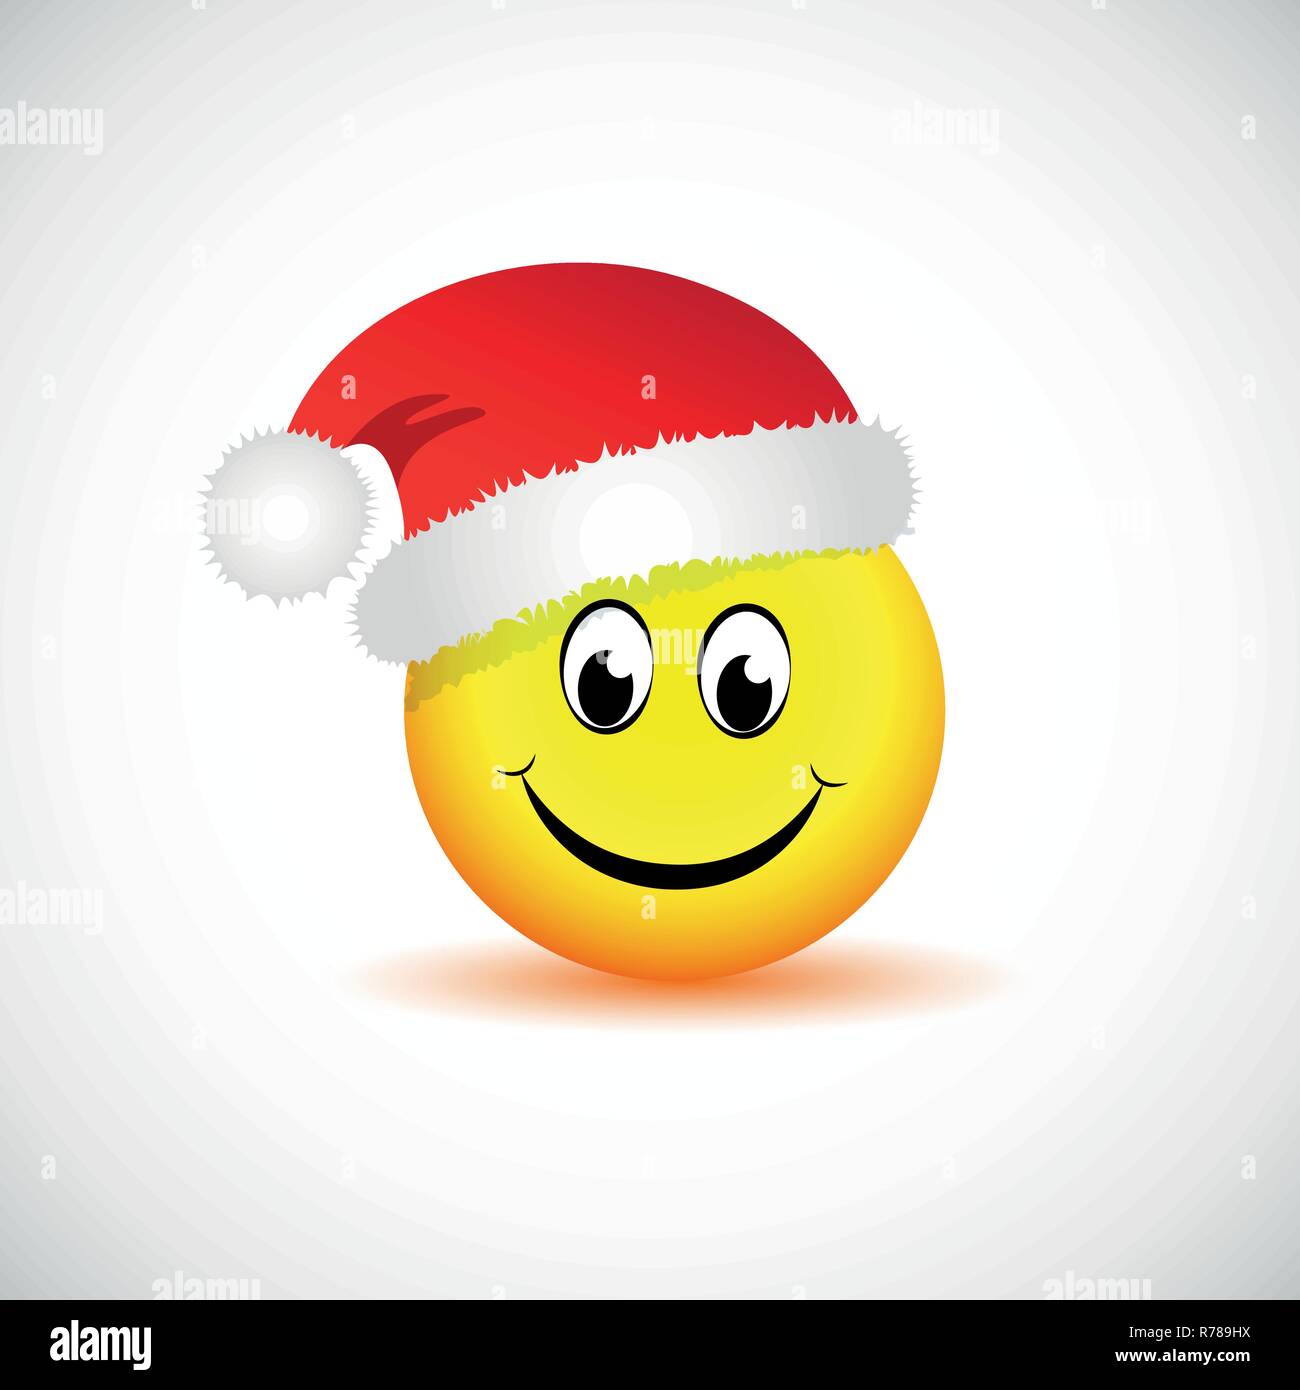 Happy Face Emoji With Red Santa Cap Vector Illustration Eps10 Stock Vector Image Art Alamy